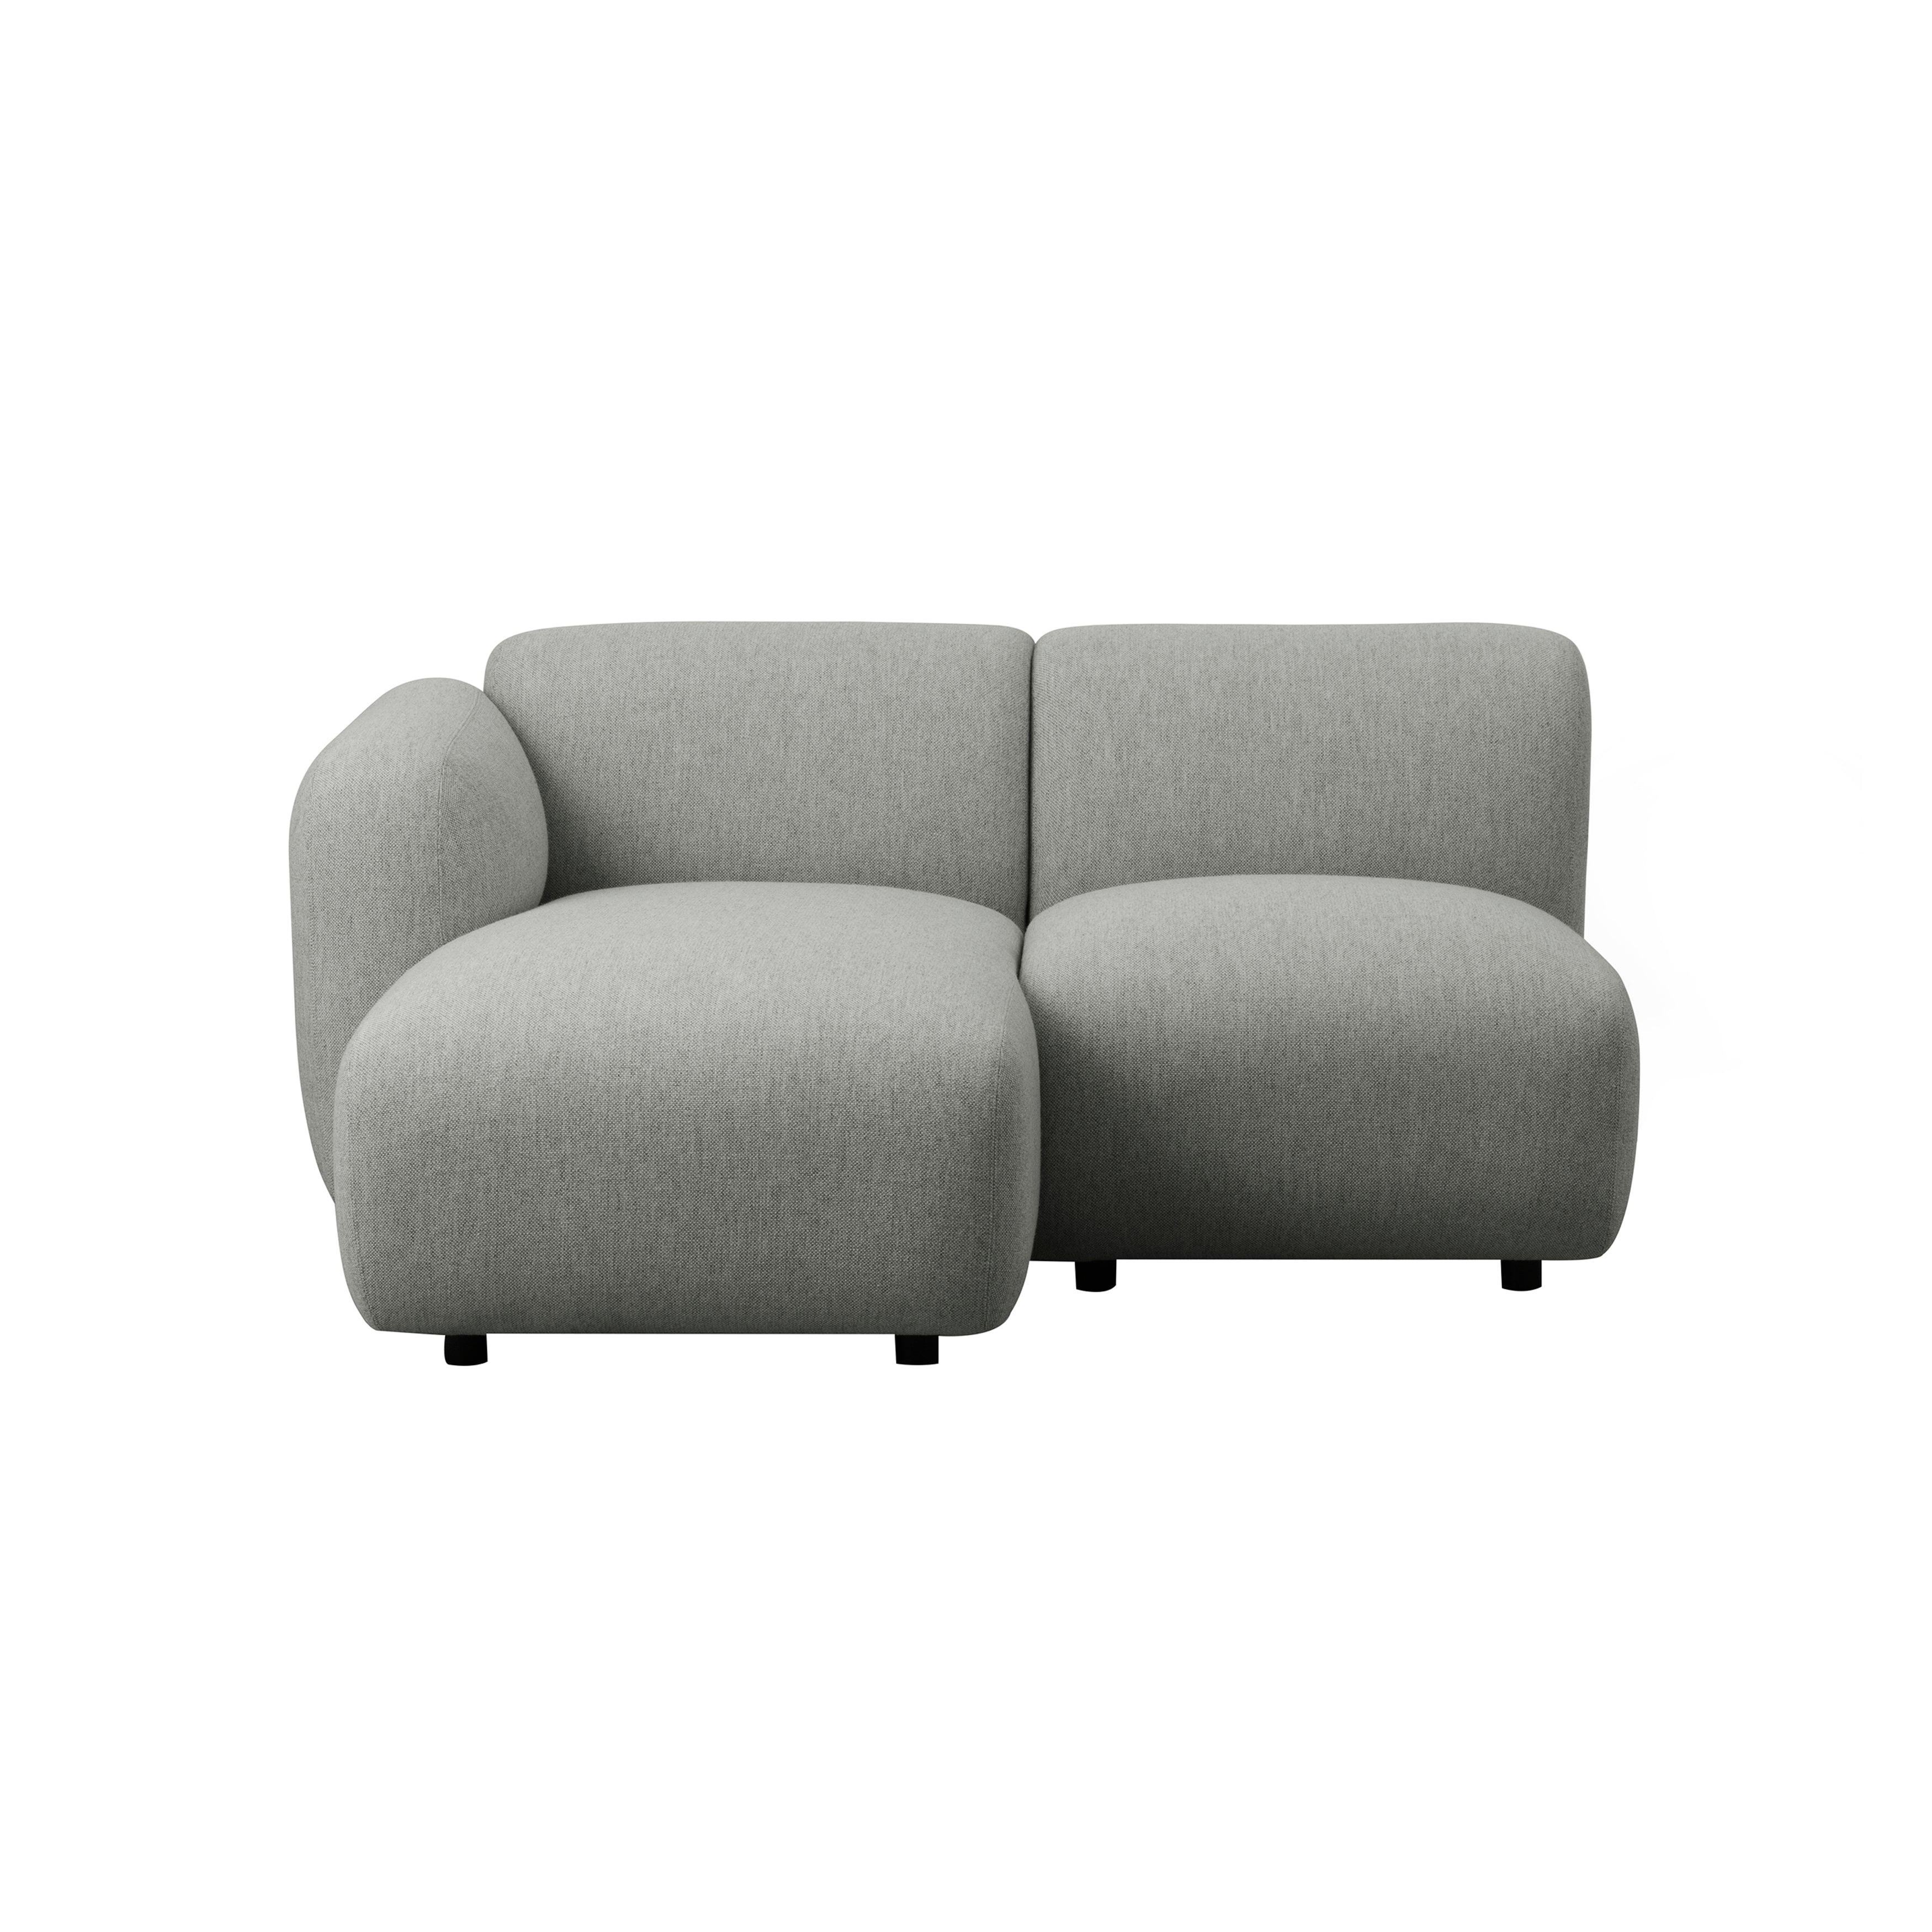 Swell Modular 2 Seater Sofa: Configuration 1